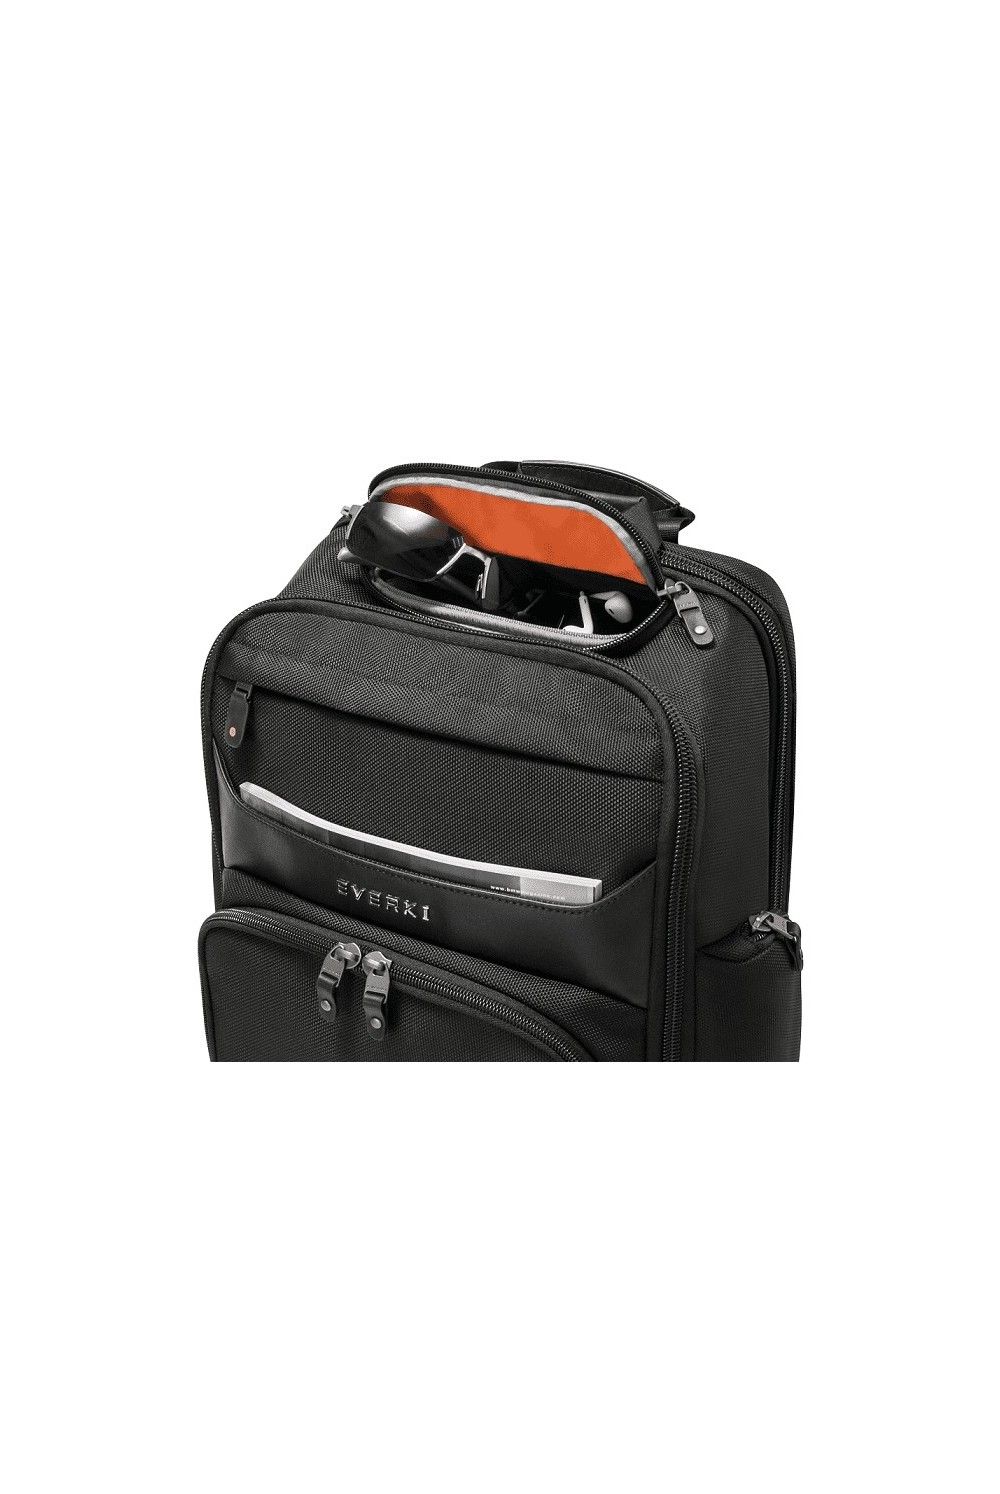 Premium Laptop Backpack Onyx Everki 15.6 inches